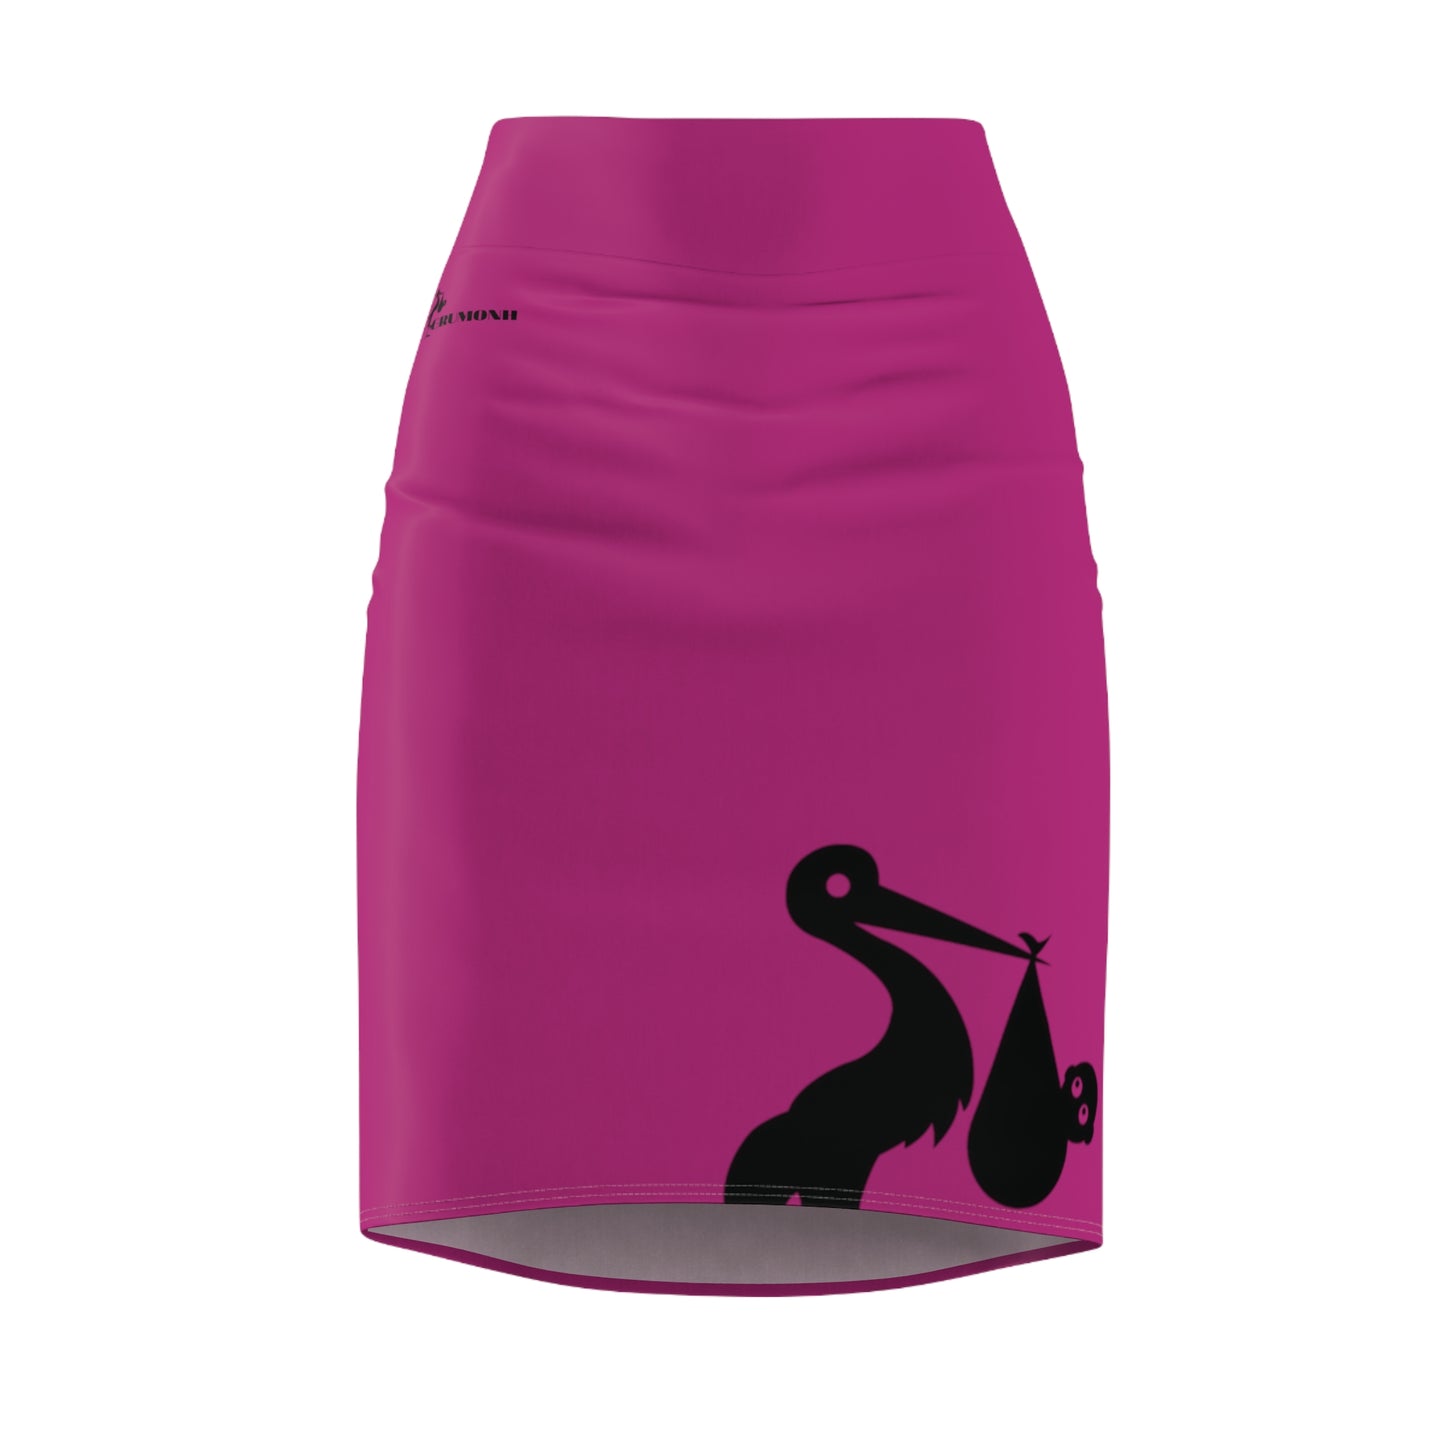 GRUMONH Women's Pencil Skirt Pink